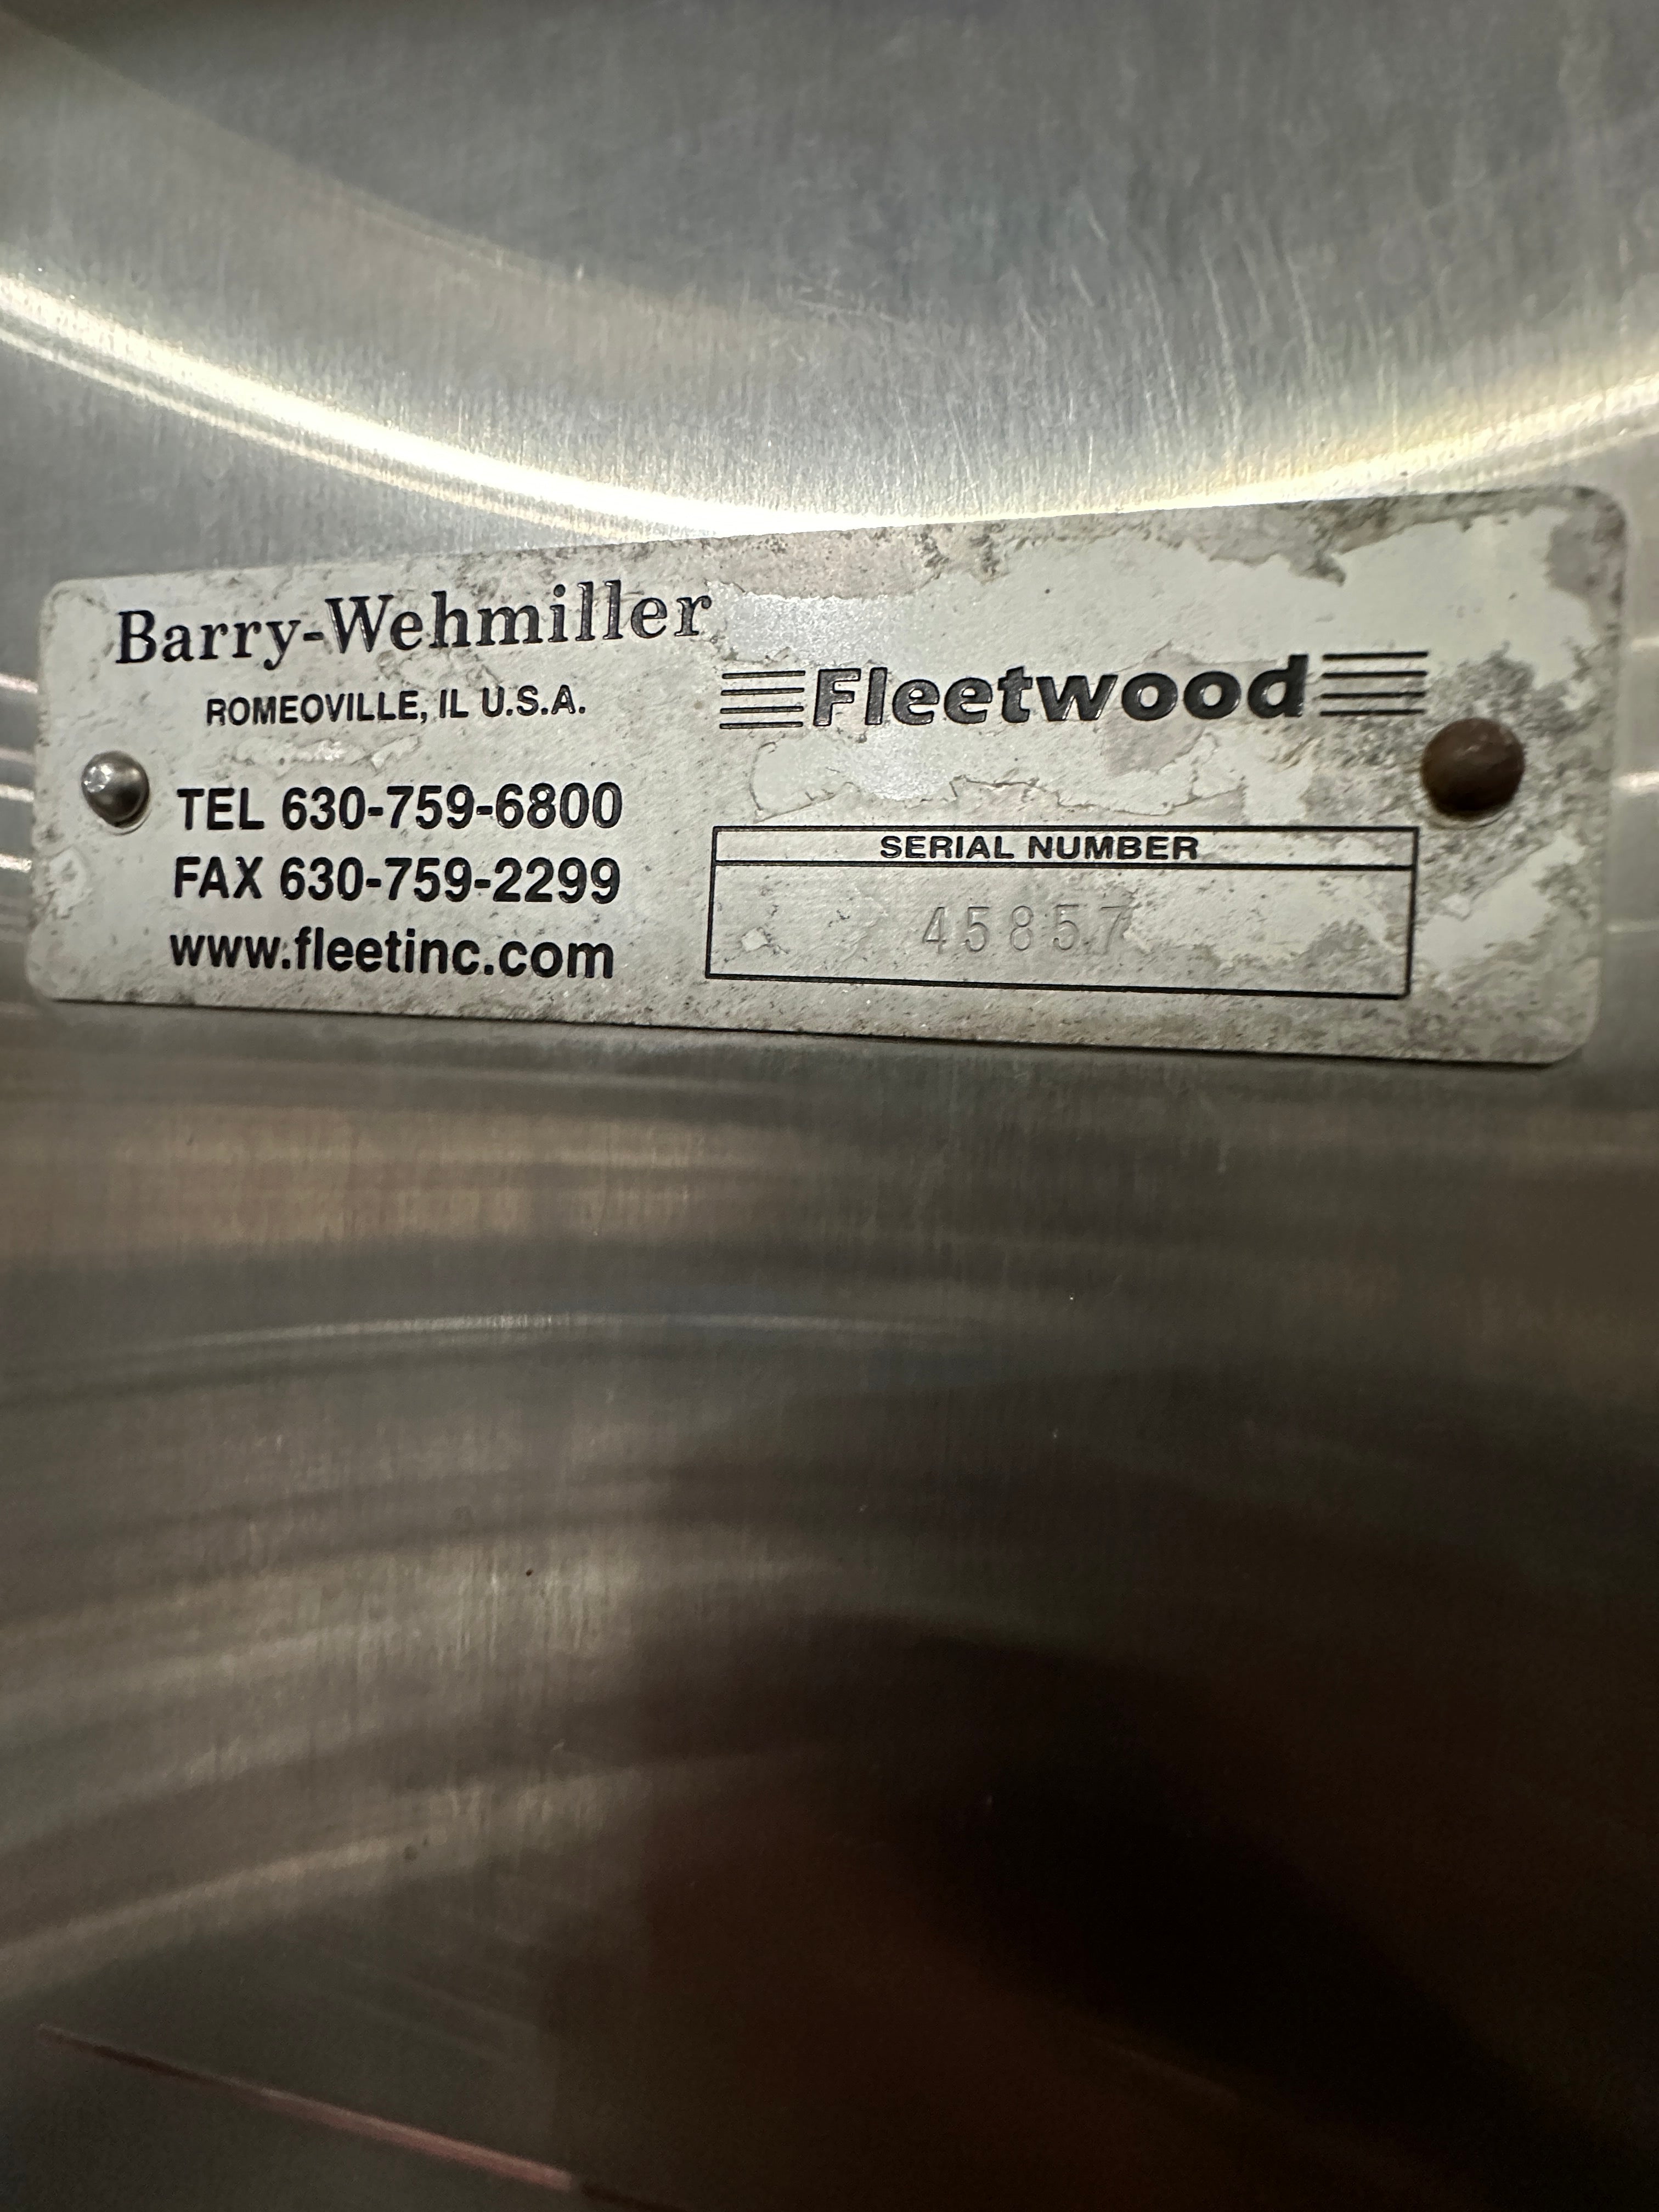 Barry-Wehmiller Fleetwood Ionizer